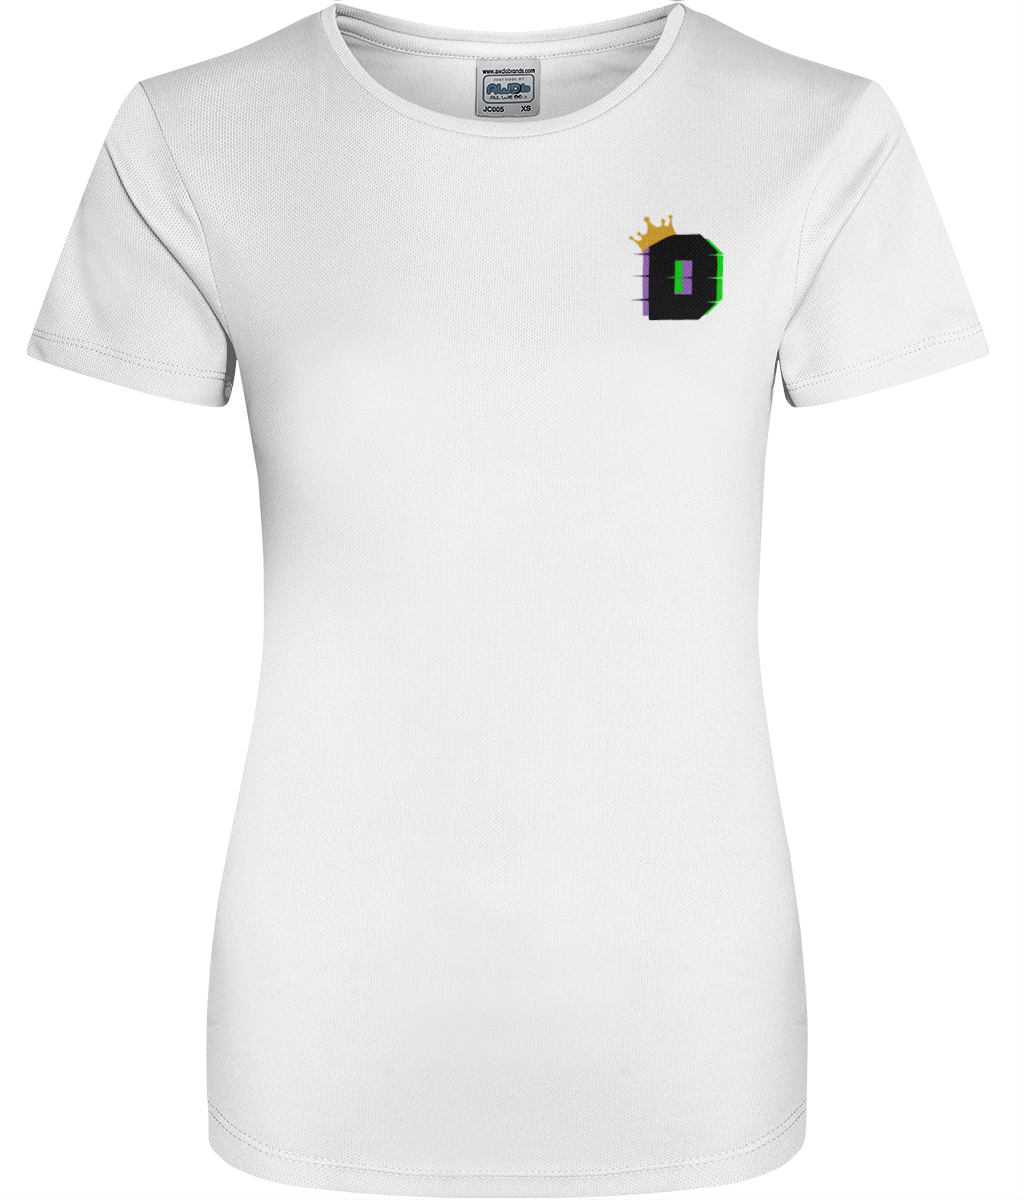 The King D42 Women's Cool Sports T-shirt